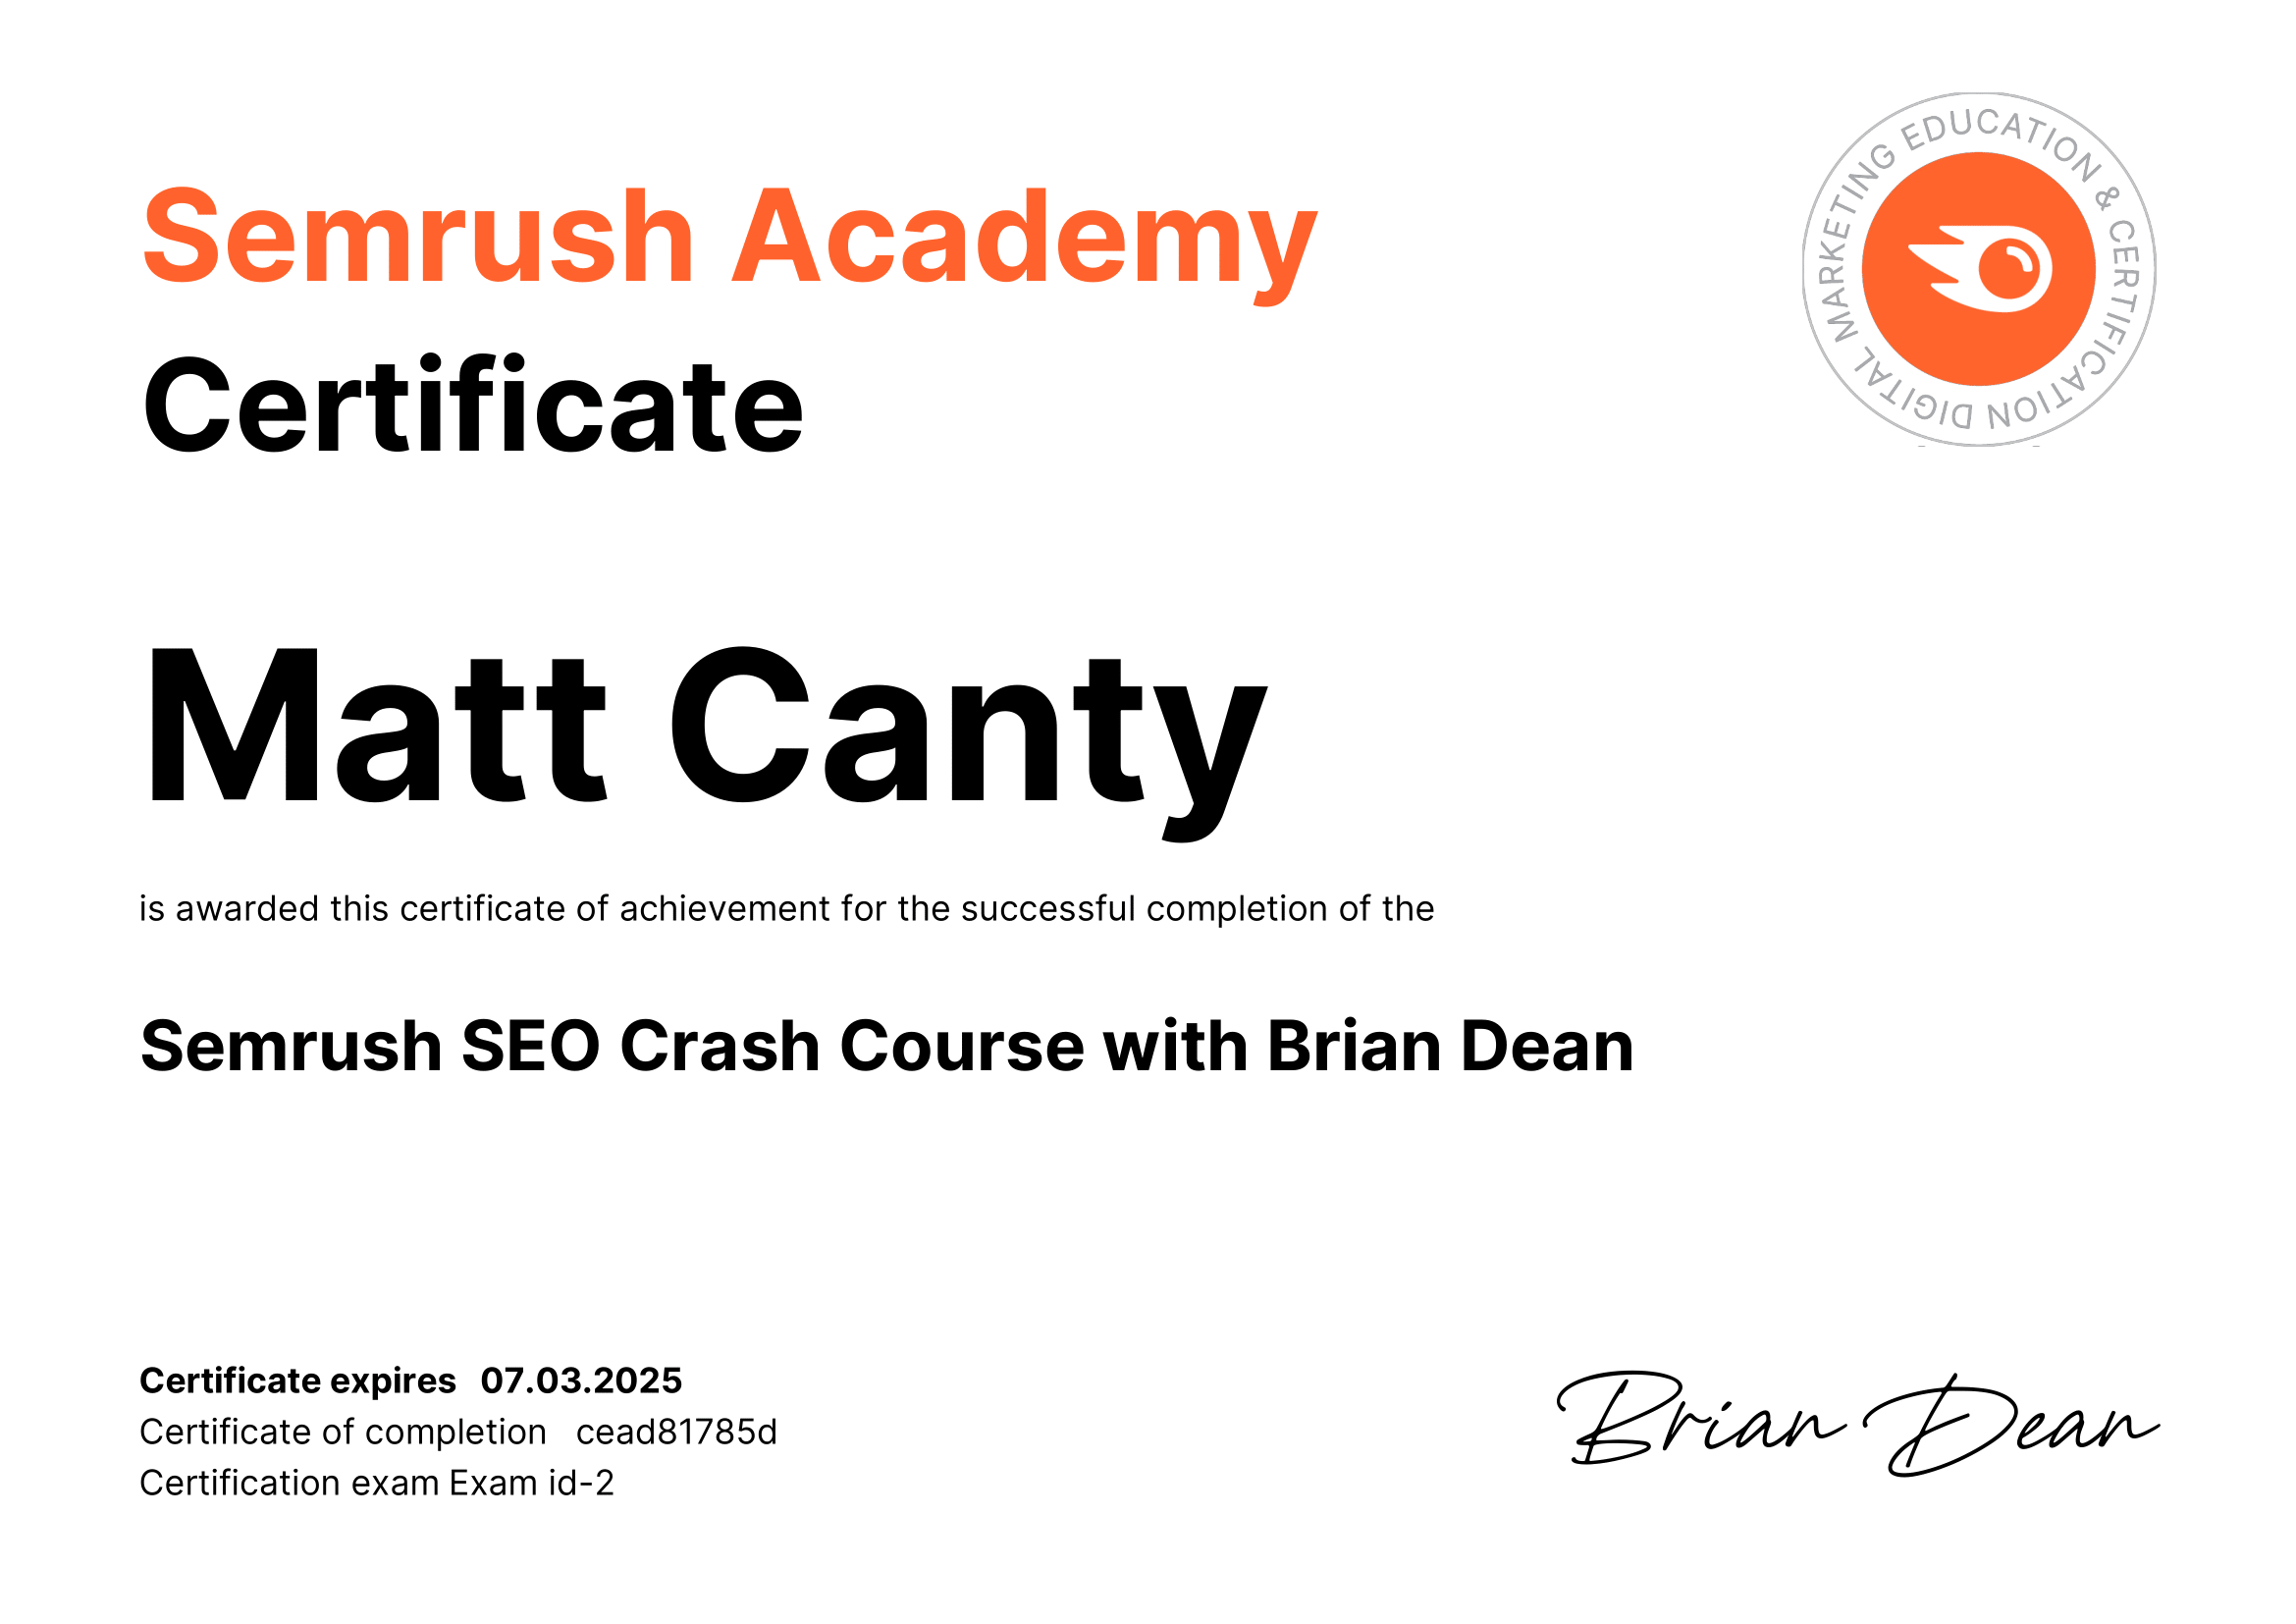 Semrush SEO Crash Course with Brian Dean certificate